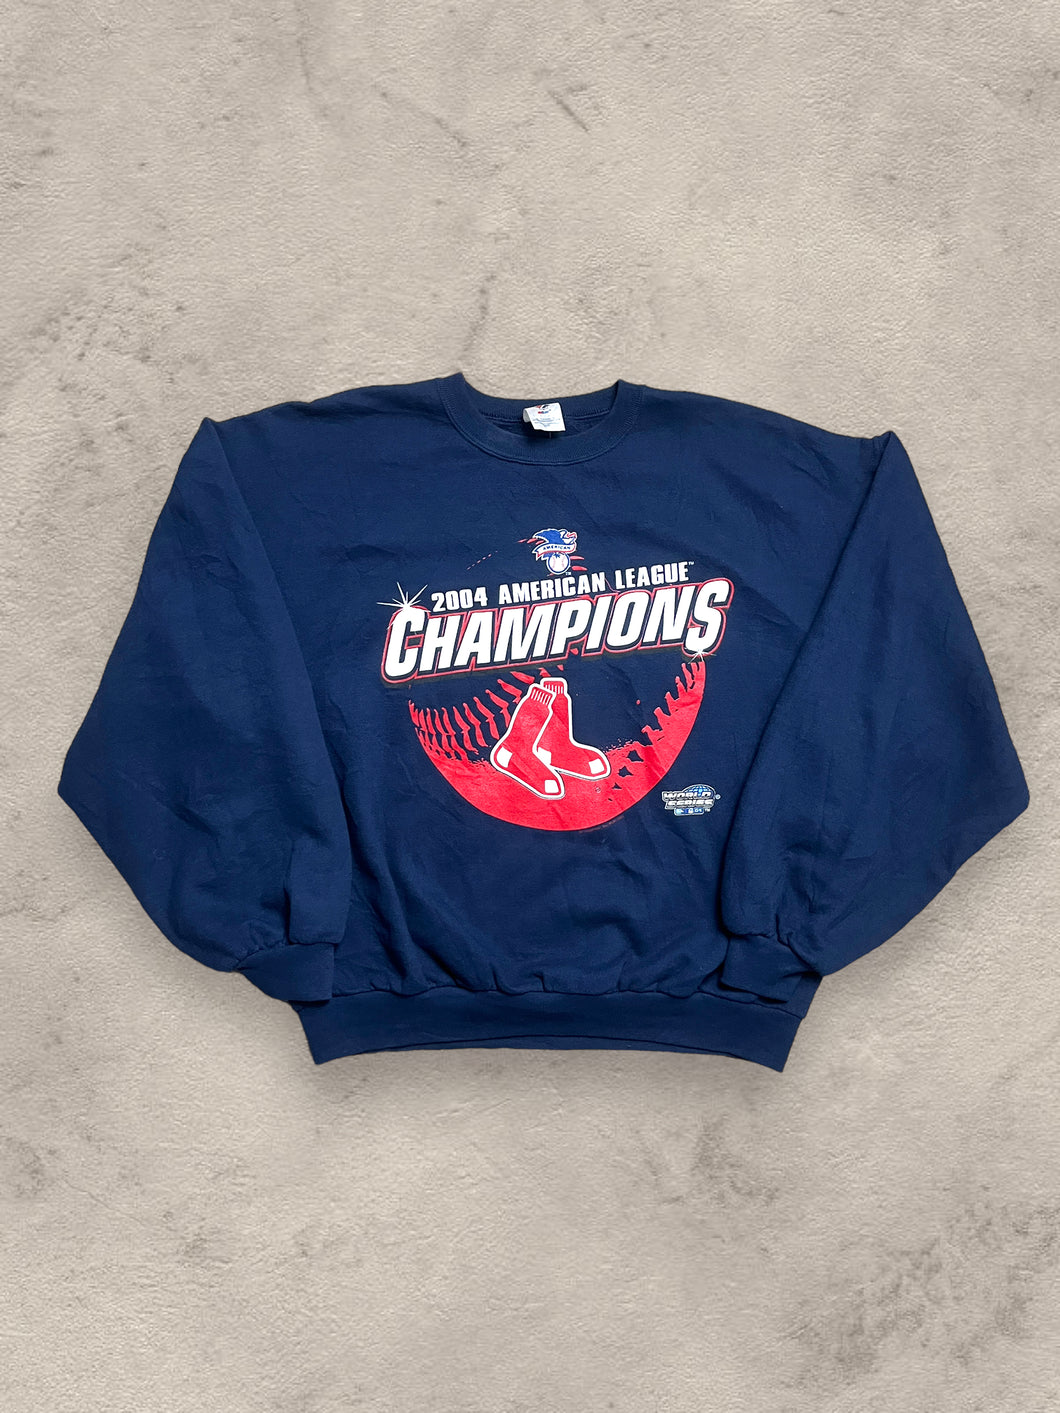 2004 World Series Champions Boston Red Sox Sweatshirt - Large